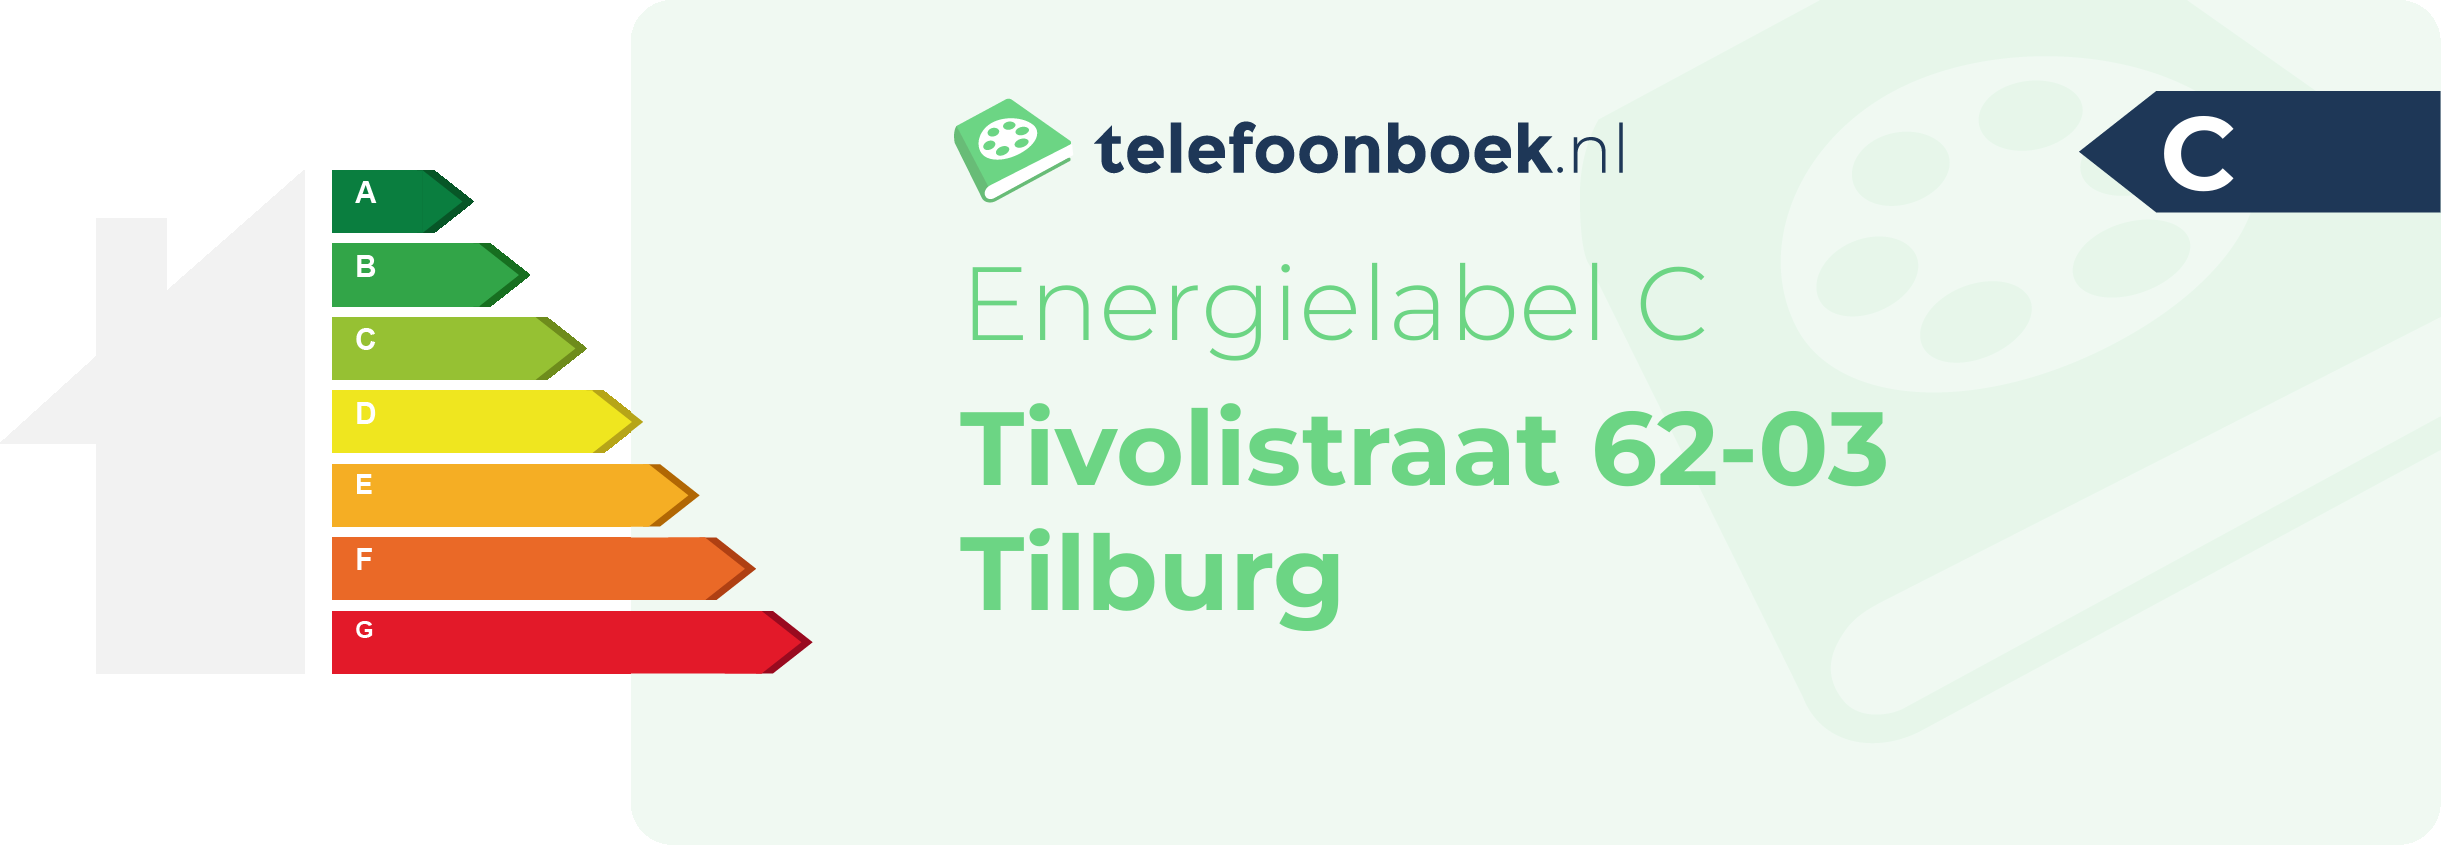 Energielabel Tivolistraat 62-03 Tilburg